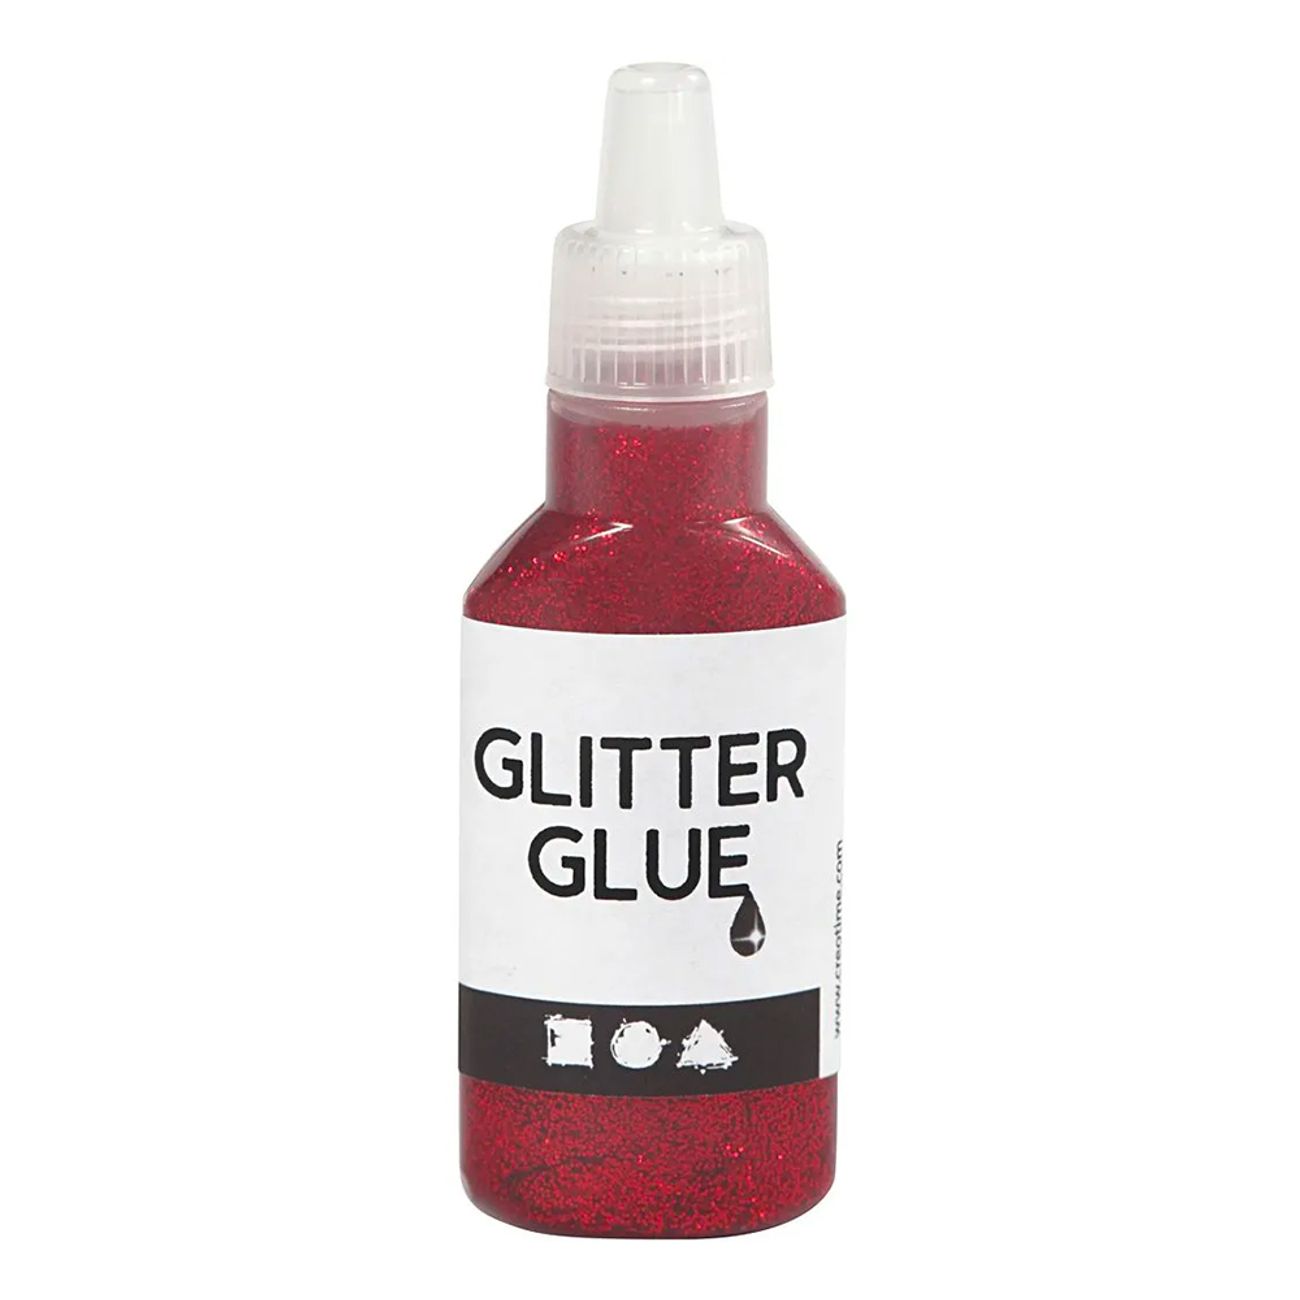 glitterlim-i-flaska-81874-4